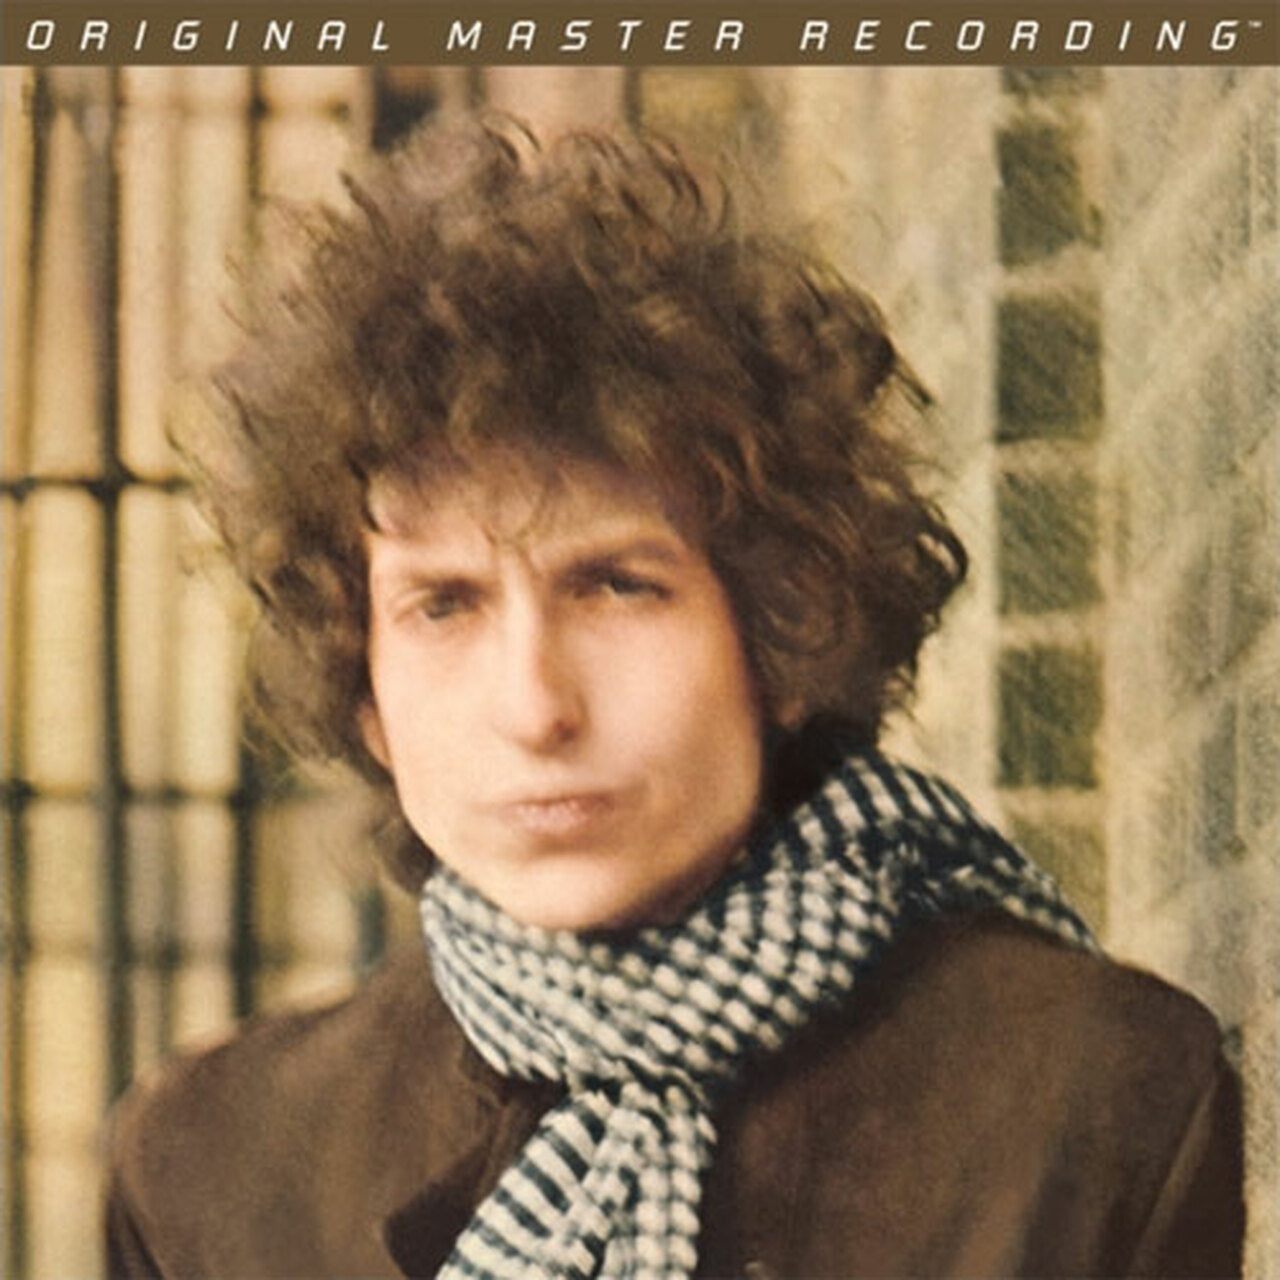 Bob Dylan - Blonde On Blonde [3LP Box] (180 Gram 45RPM Audiophile Vinyl, limited/numbered) MOBILE FIDELITY